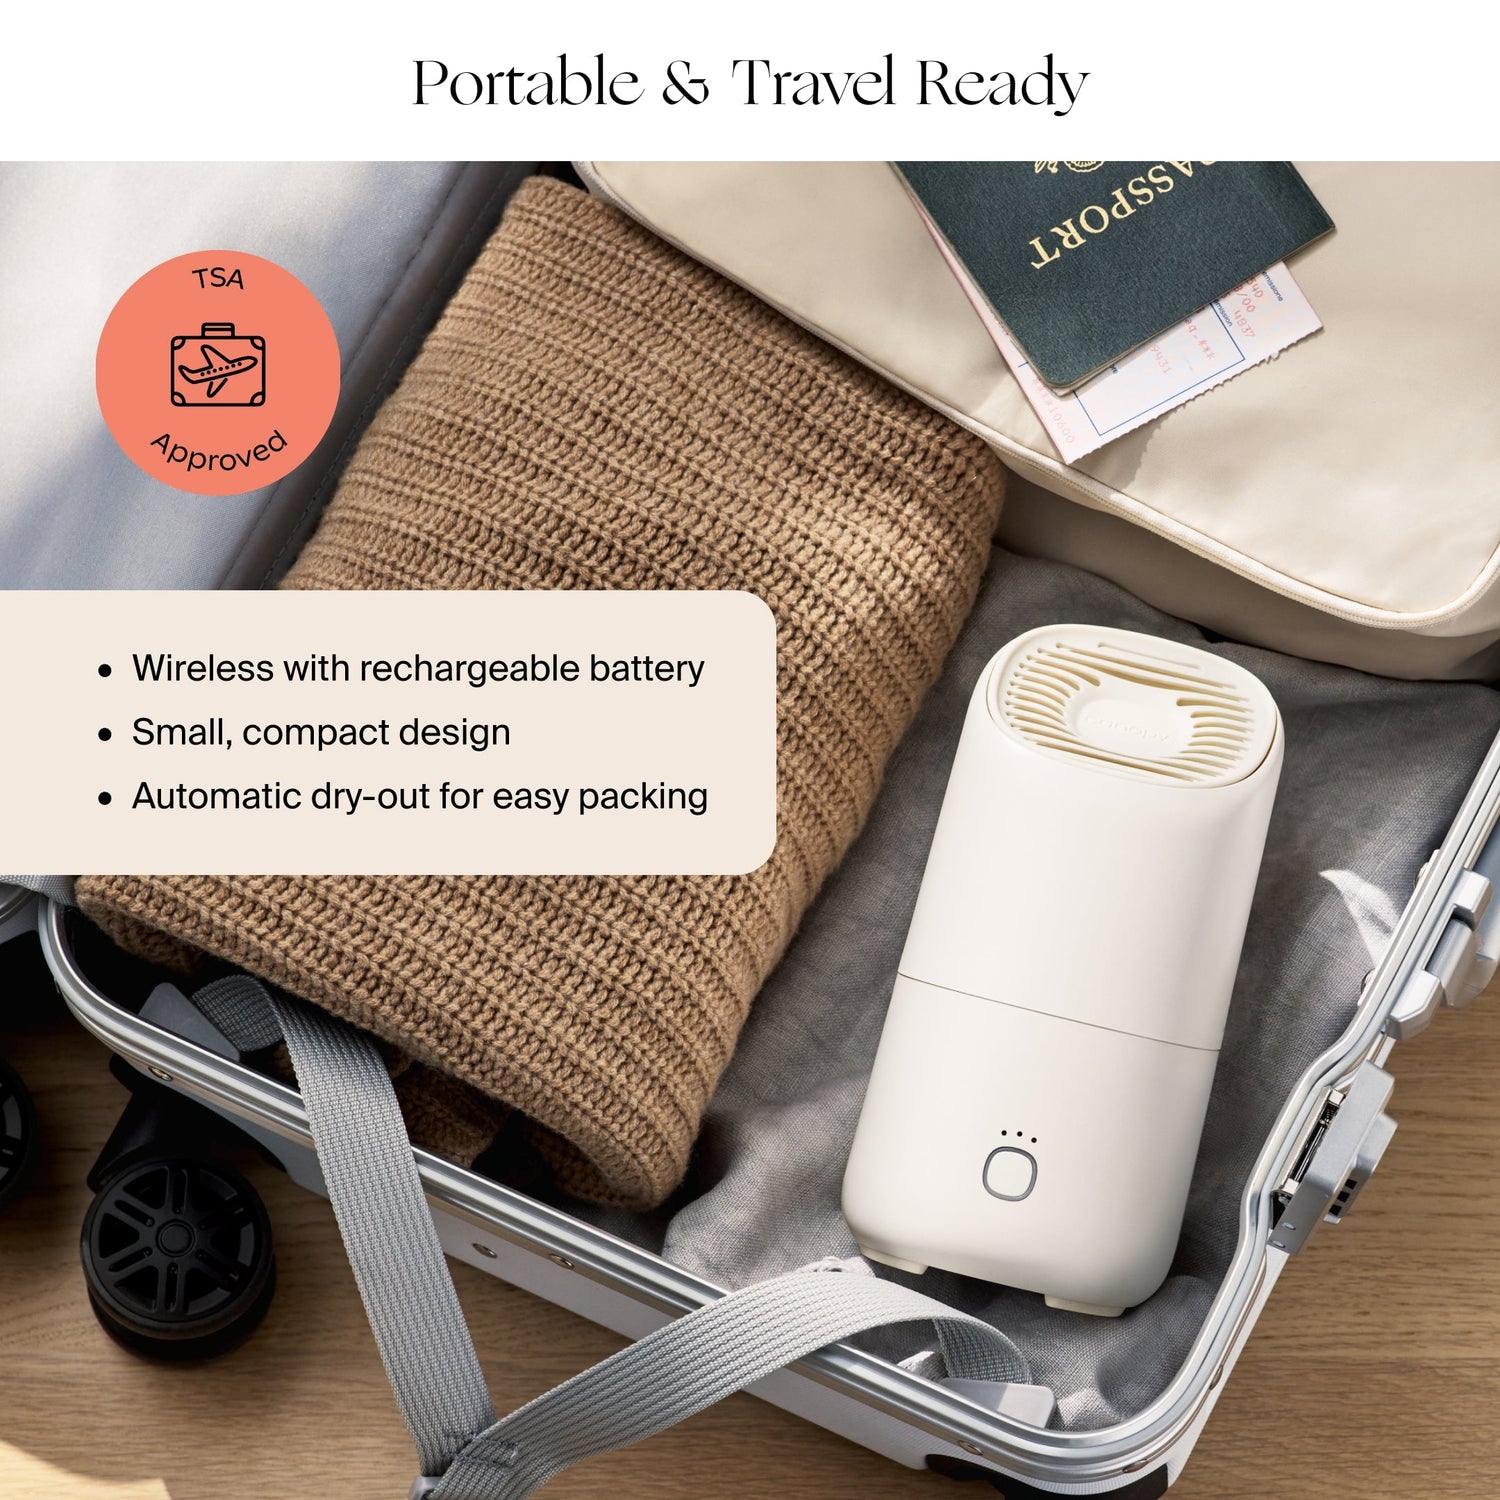 Portable Humidifier | Lifestyle, Portable & Travel Ready